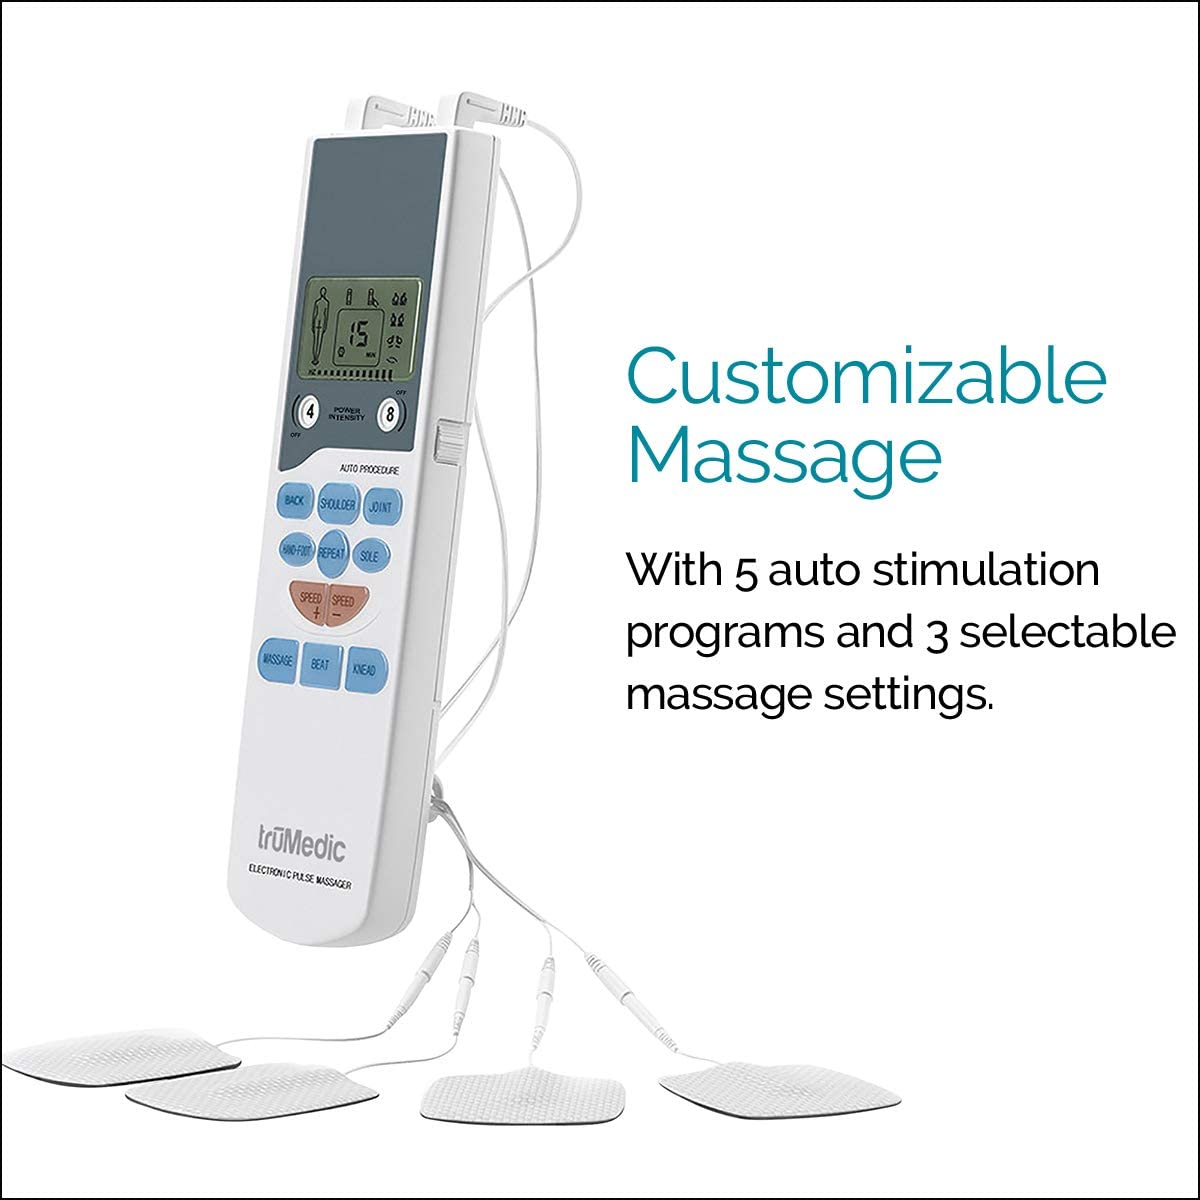 truMedic TENS Unit Electronic Pulse Massager 2" x 7.75" x .75" White/Color Buttons